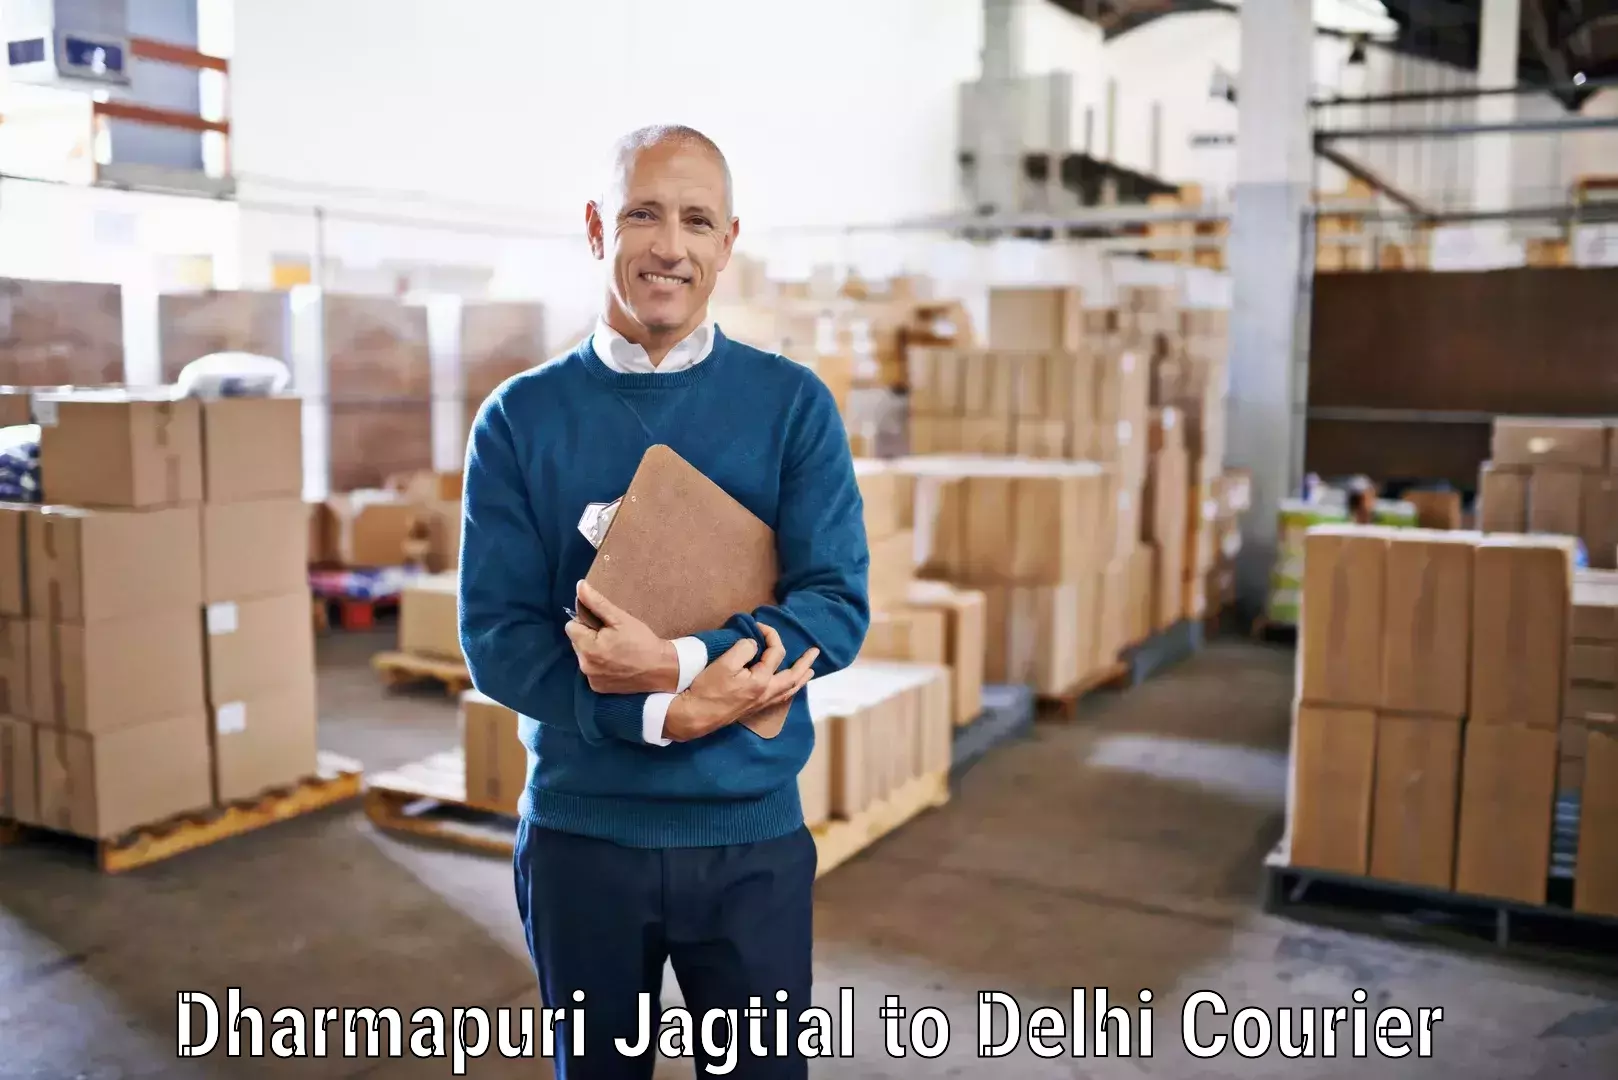 Express delivery network Dharmapuri Jagtial to East Delhi